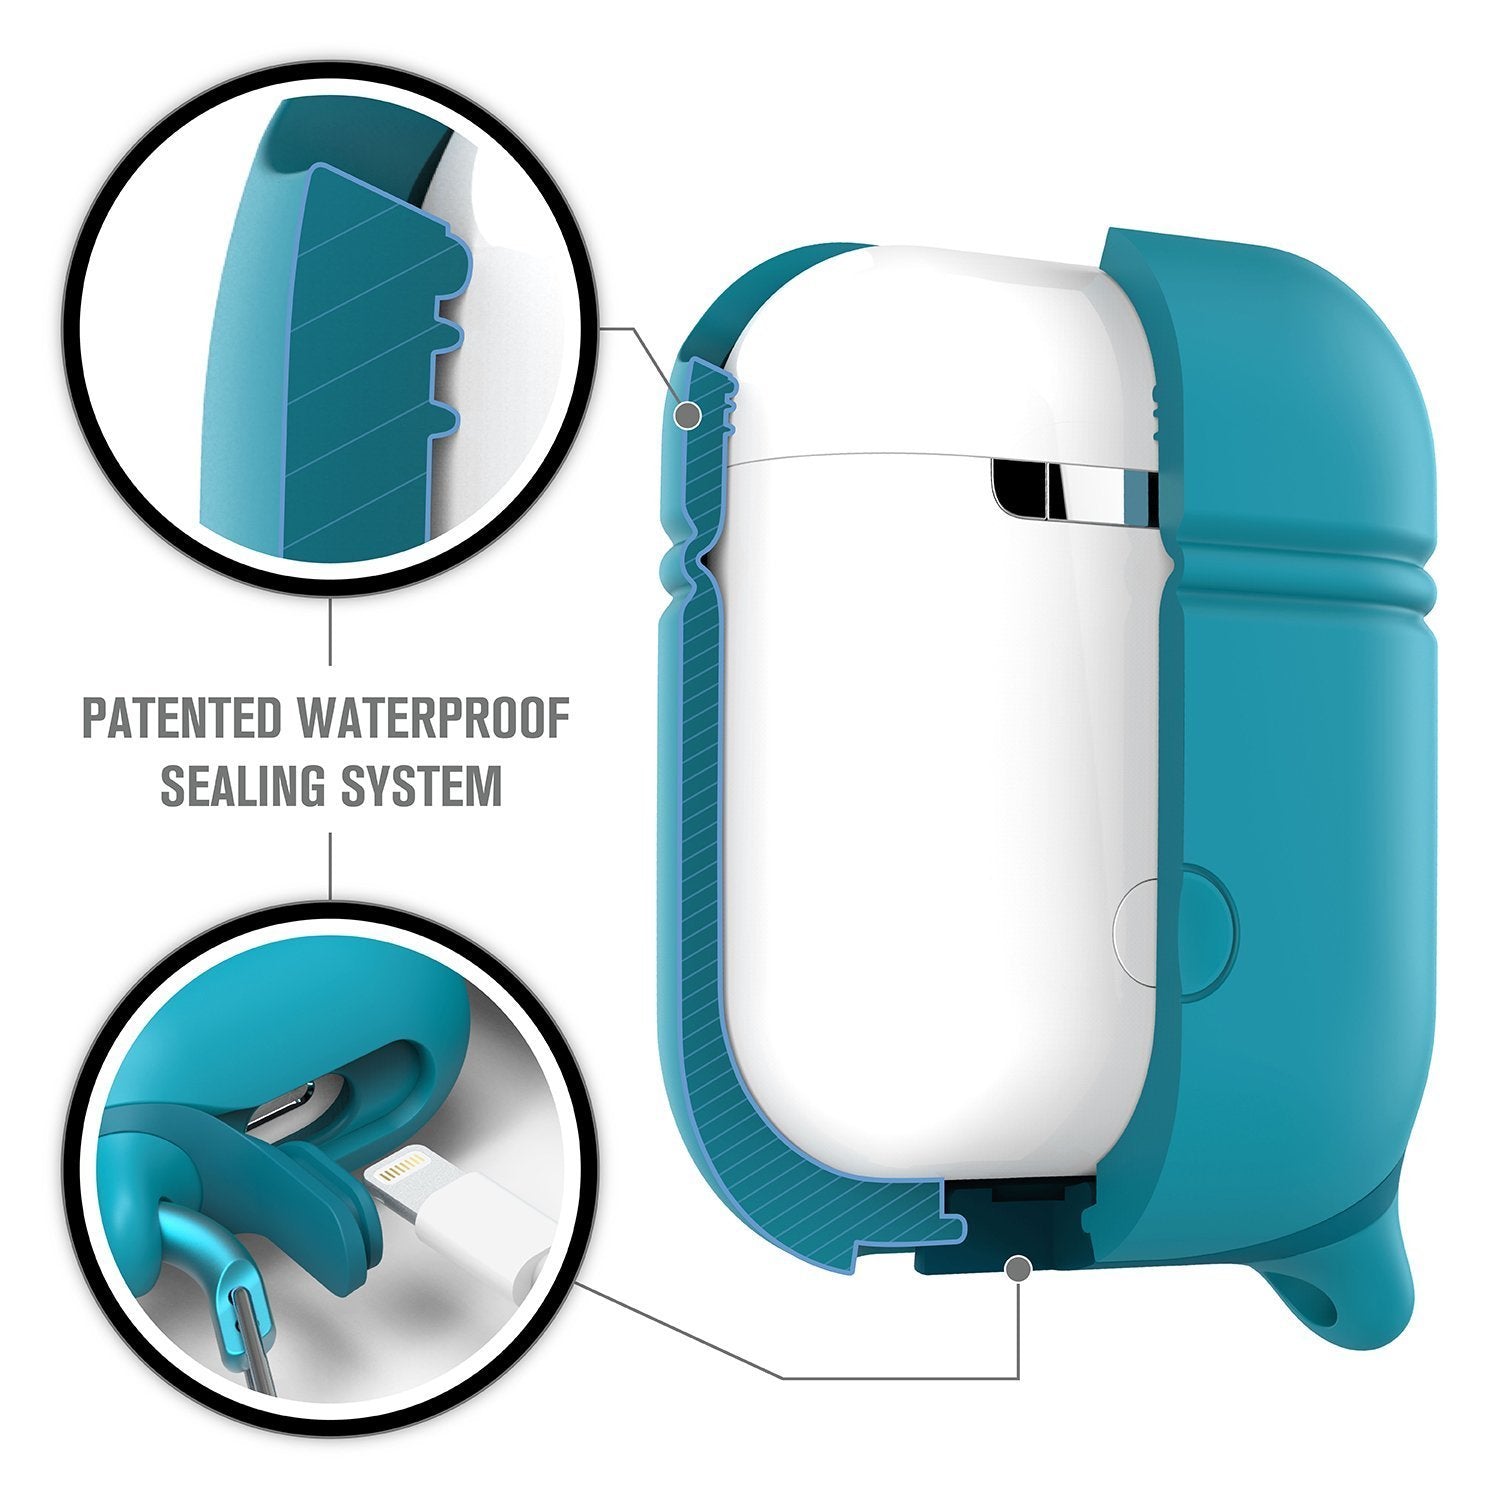 AirPods - Waterproof Case + Carabiner-EU